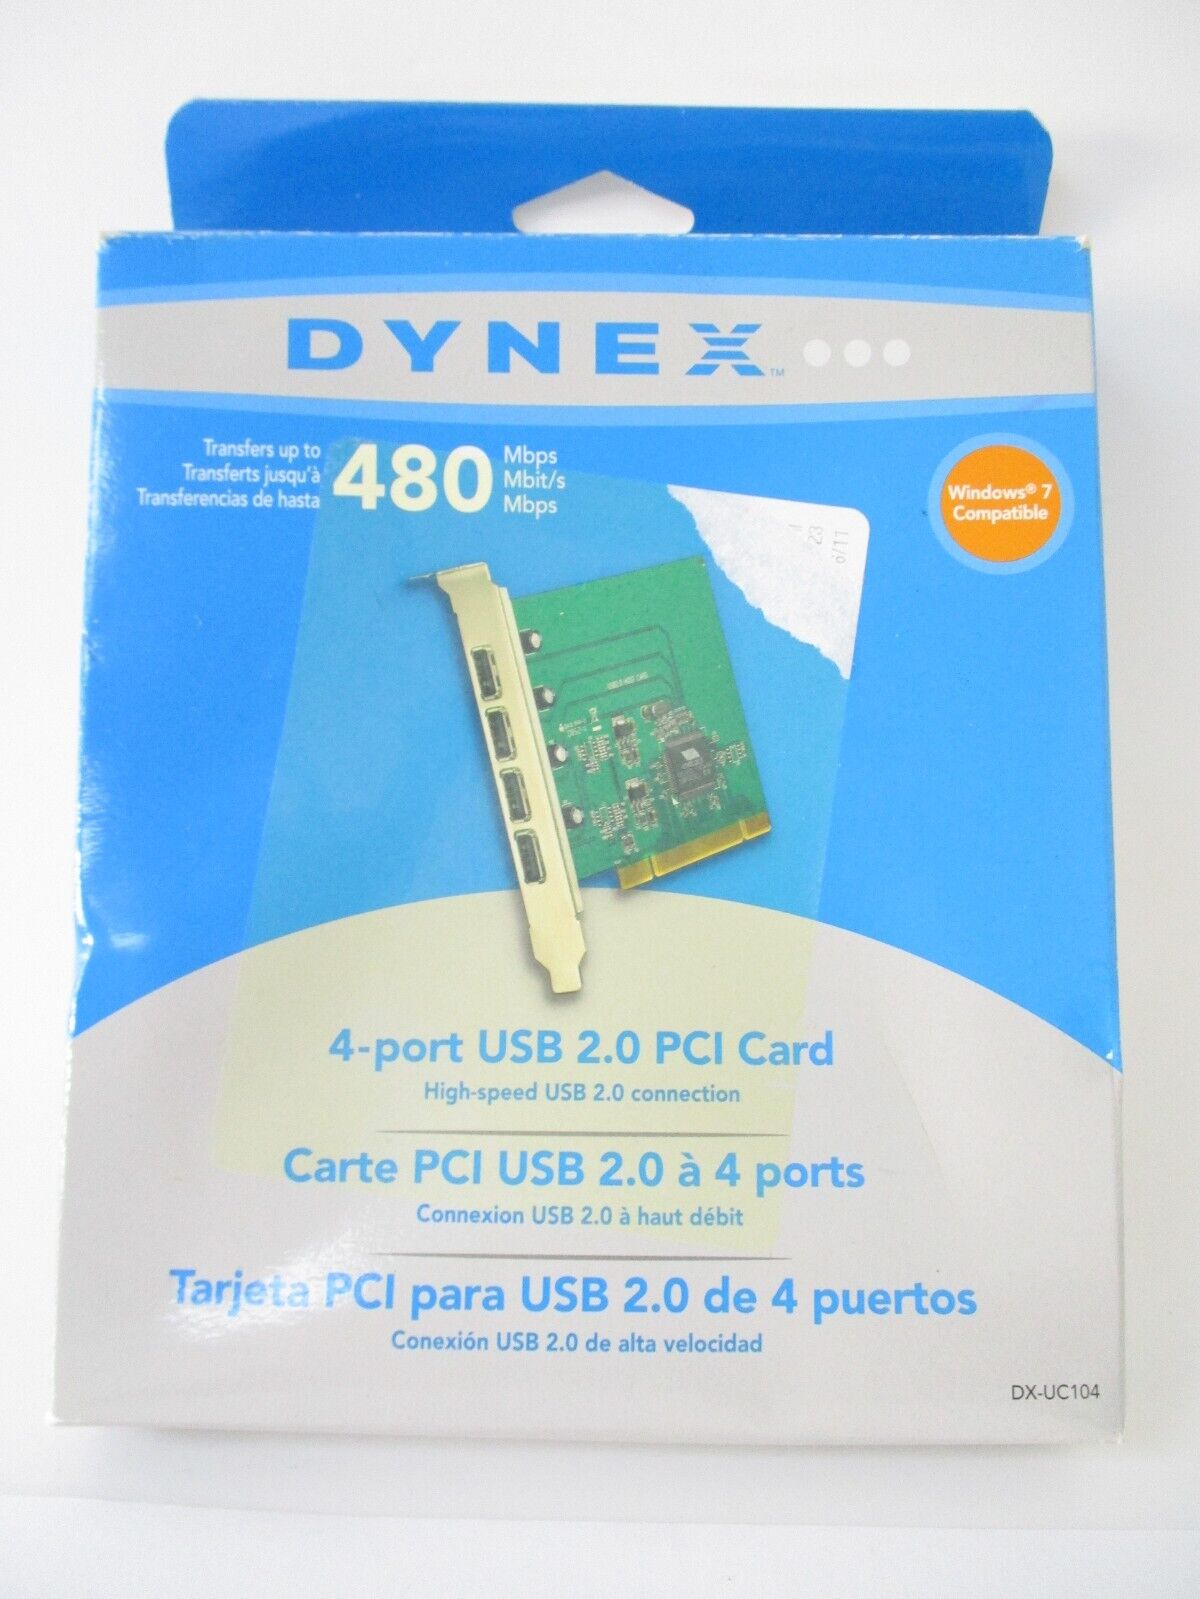 Dynex DX-UC104 4-Port USB 2.0 PCI Desktop Card